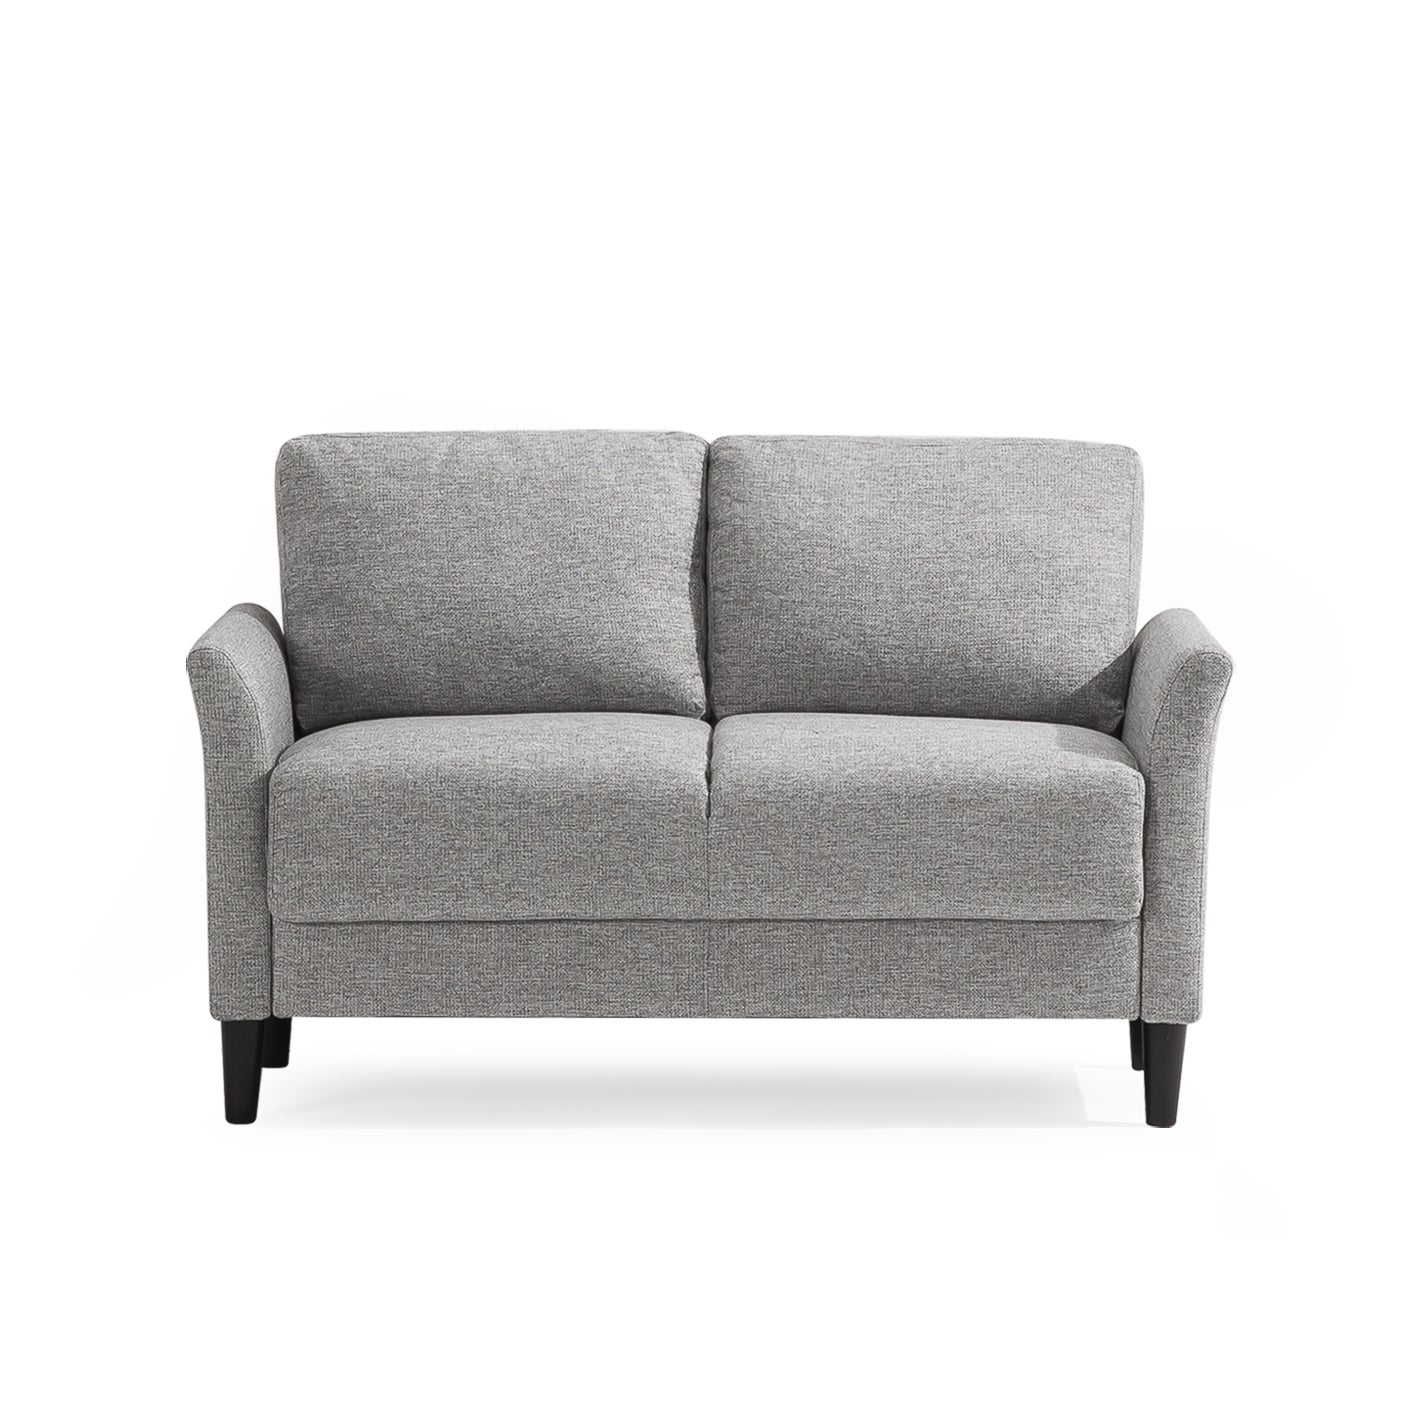 Zinus Jackie 2 Seater Sofa - Fabric Light Grey